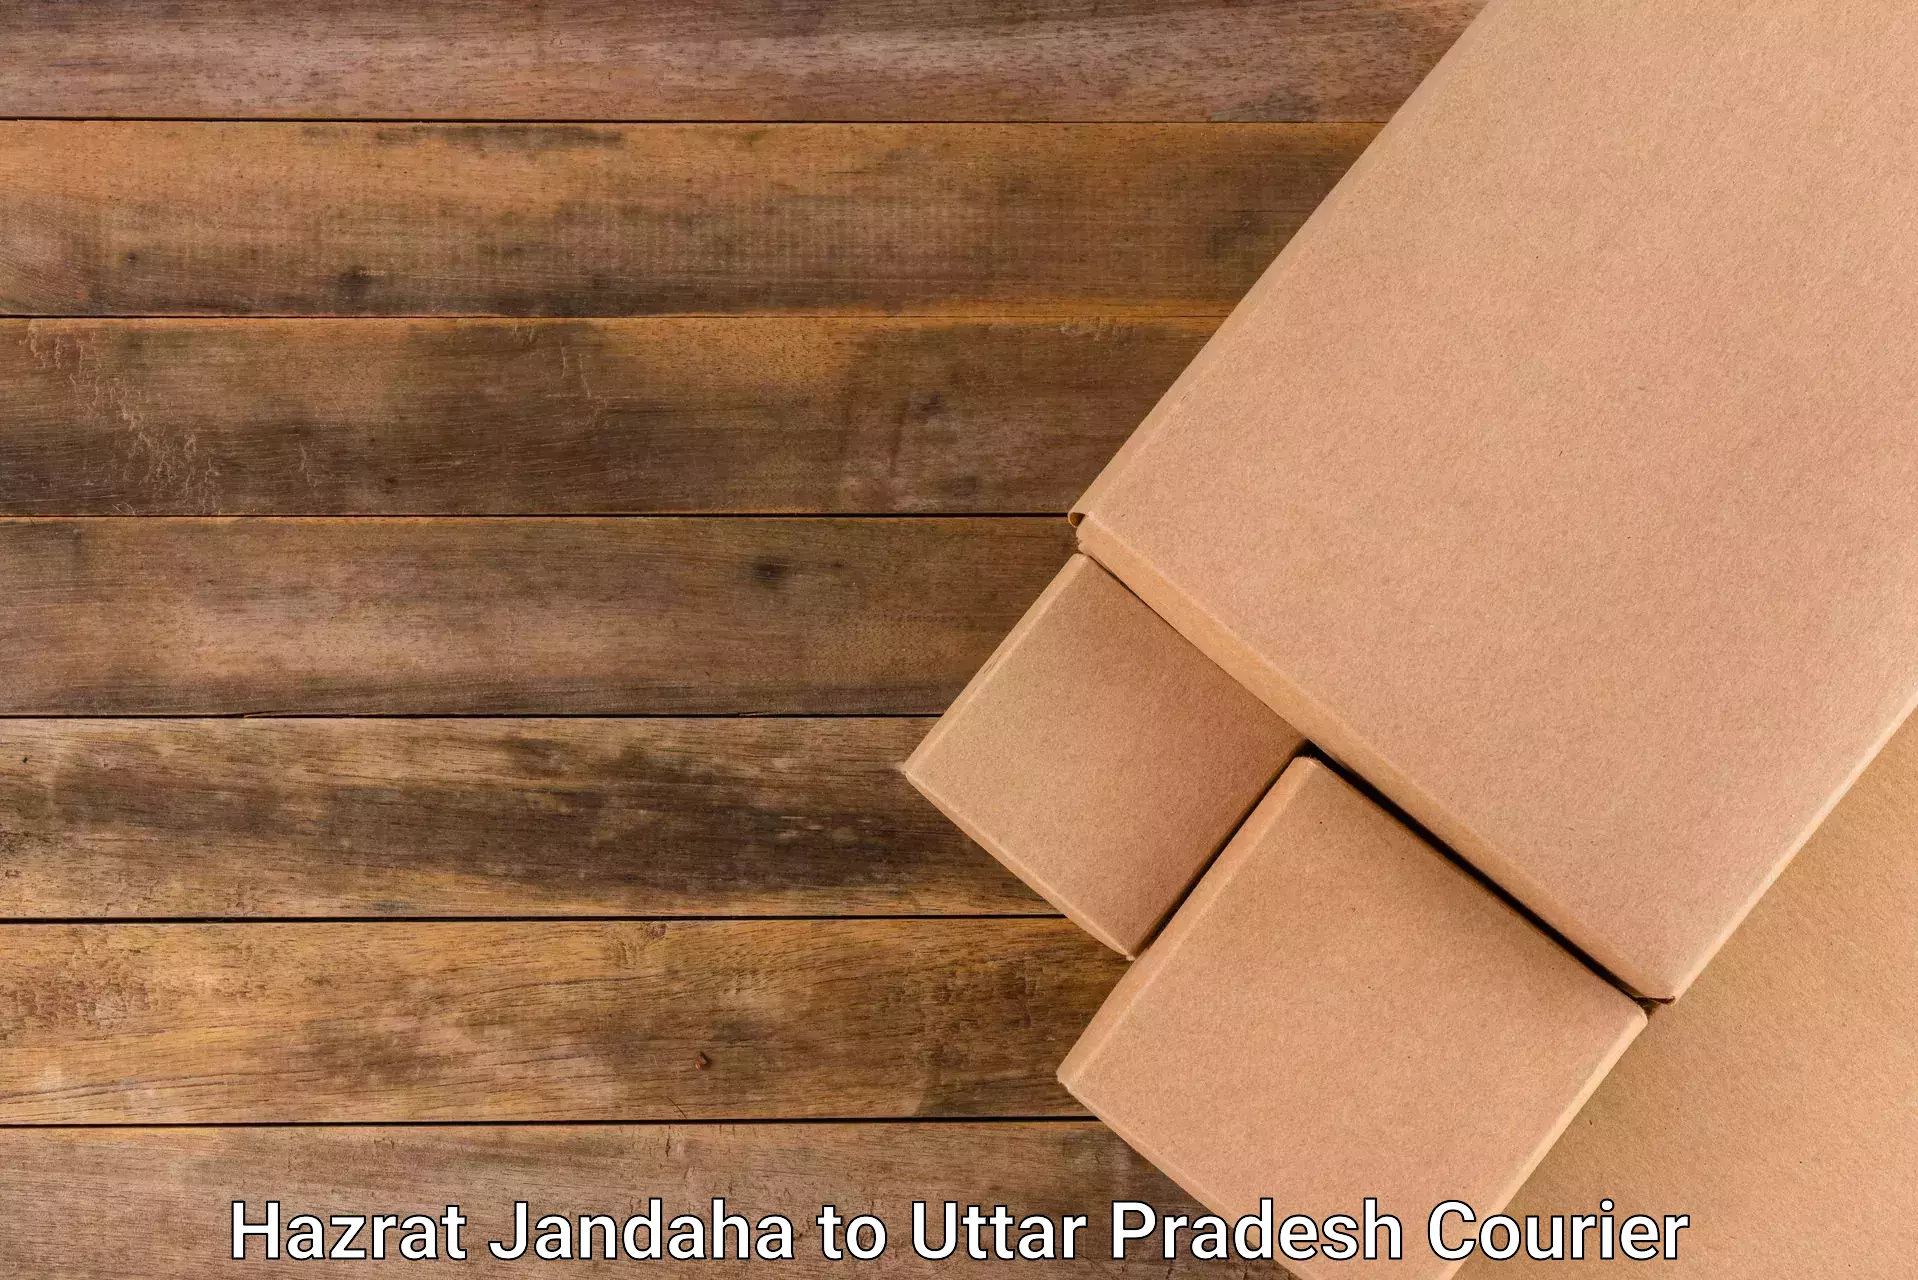 Delivery service partnership Hazrat Jandaha to Uttar Pradesh